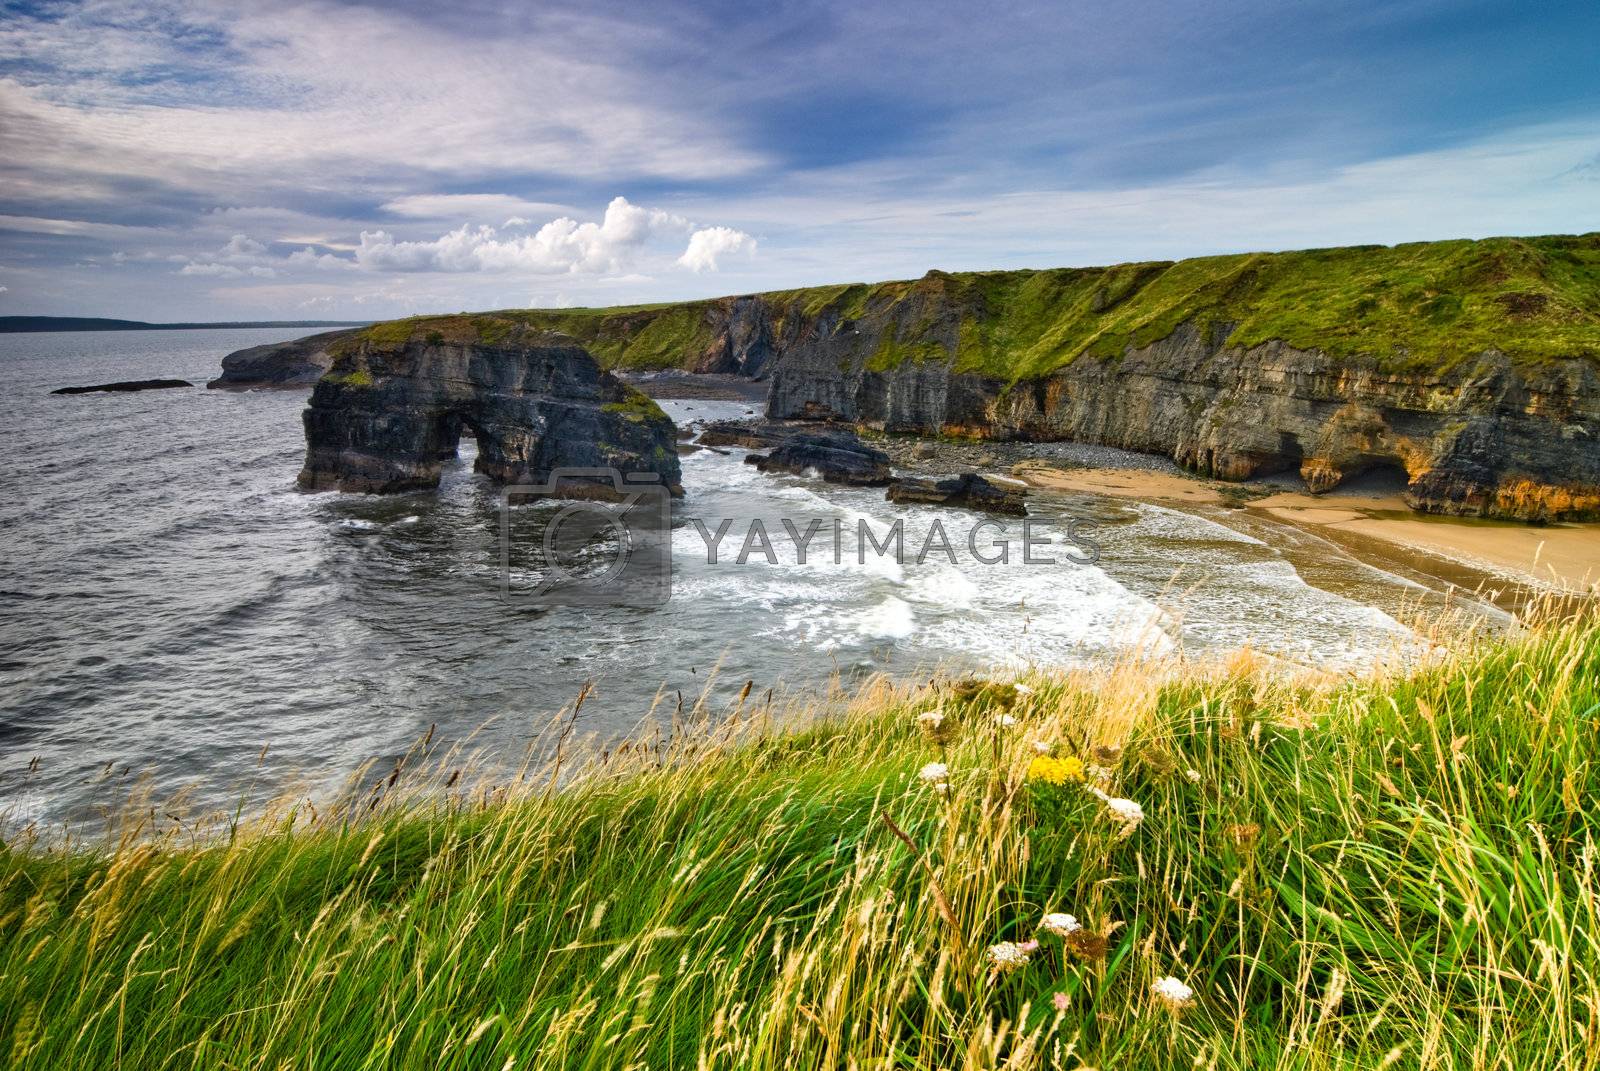 Royalty free image of Cliffs in Ireland by rafalstachura